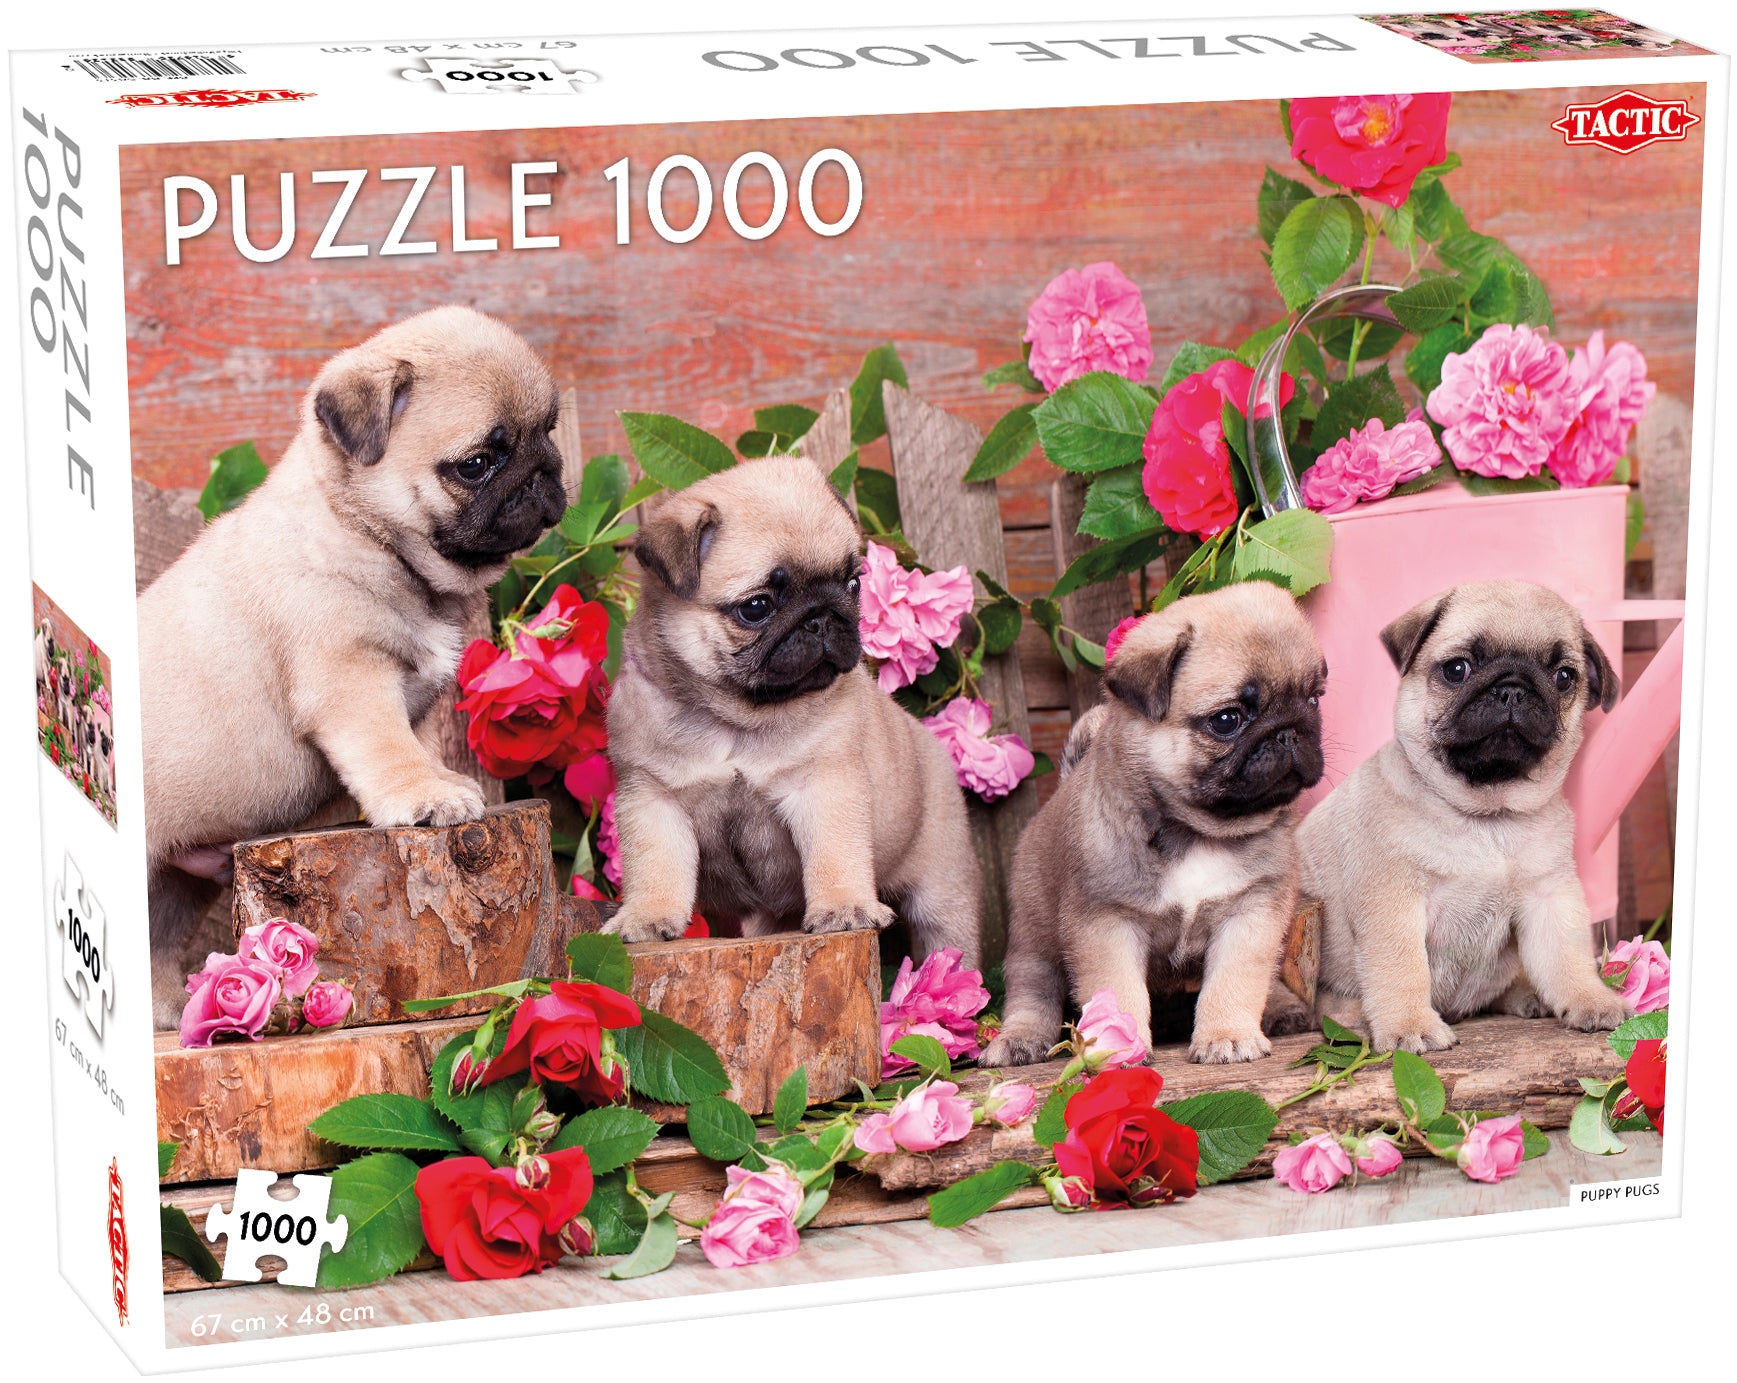 Tactic Puzzle 1000 pc Pug Puppies